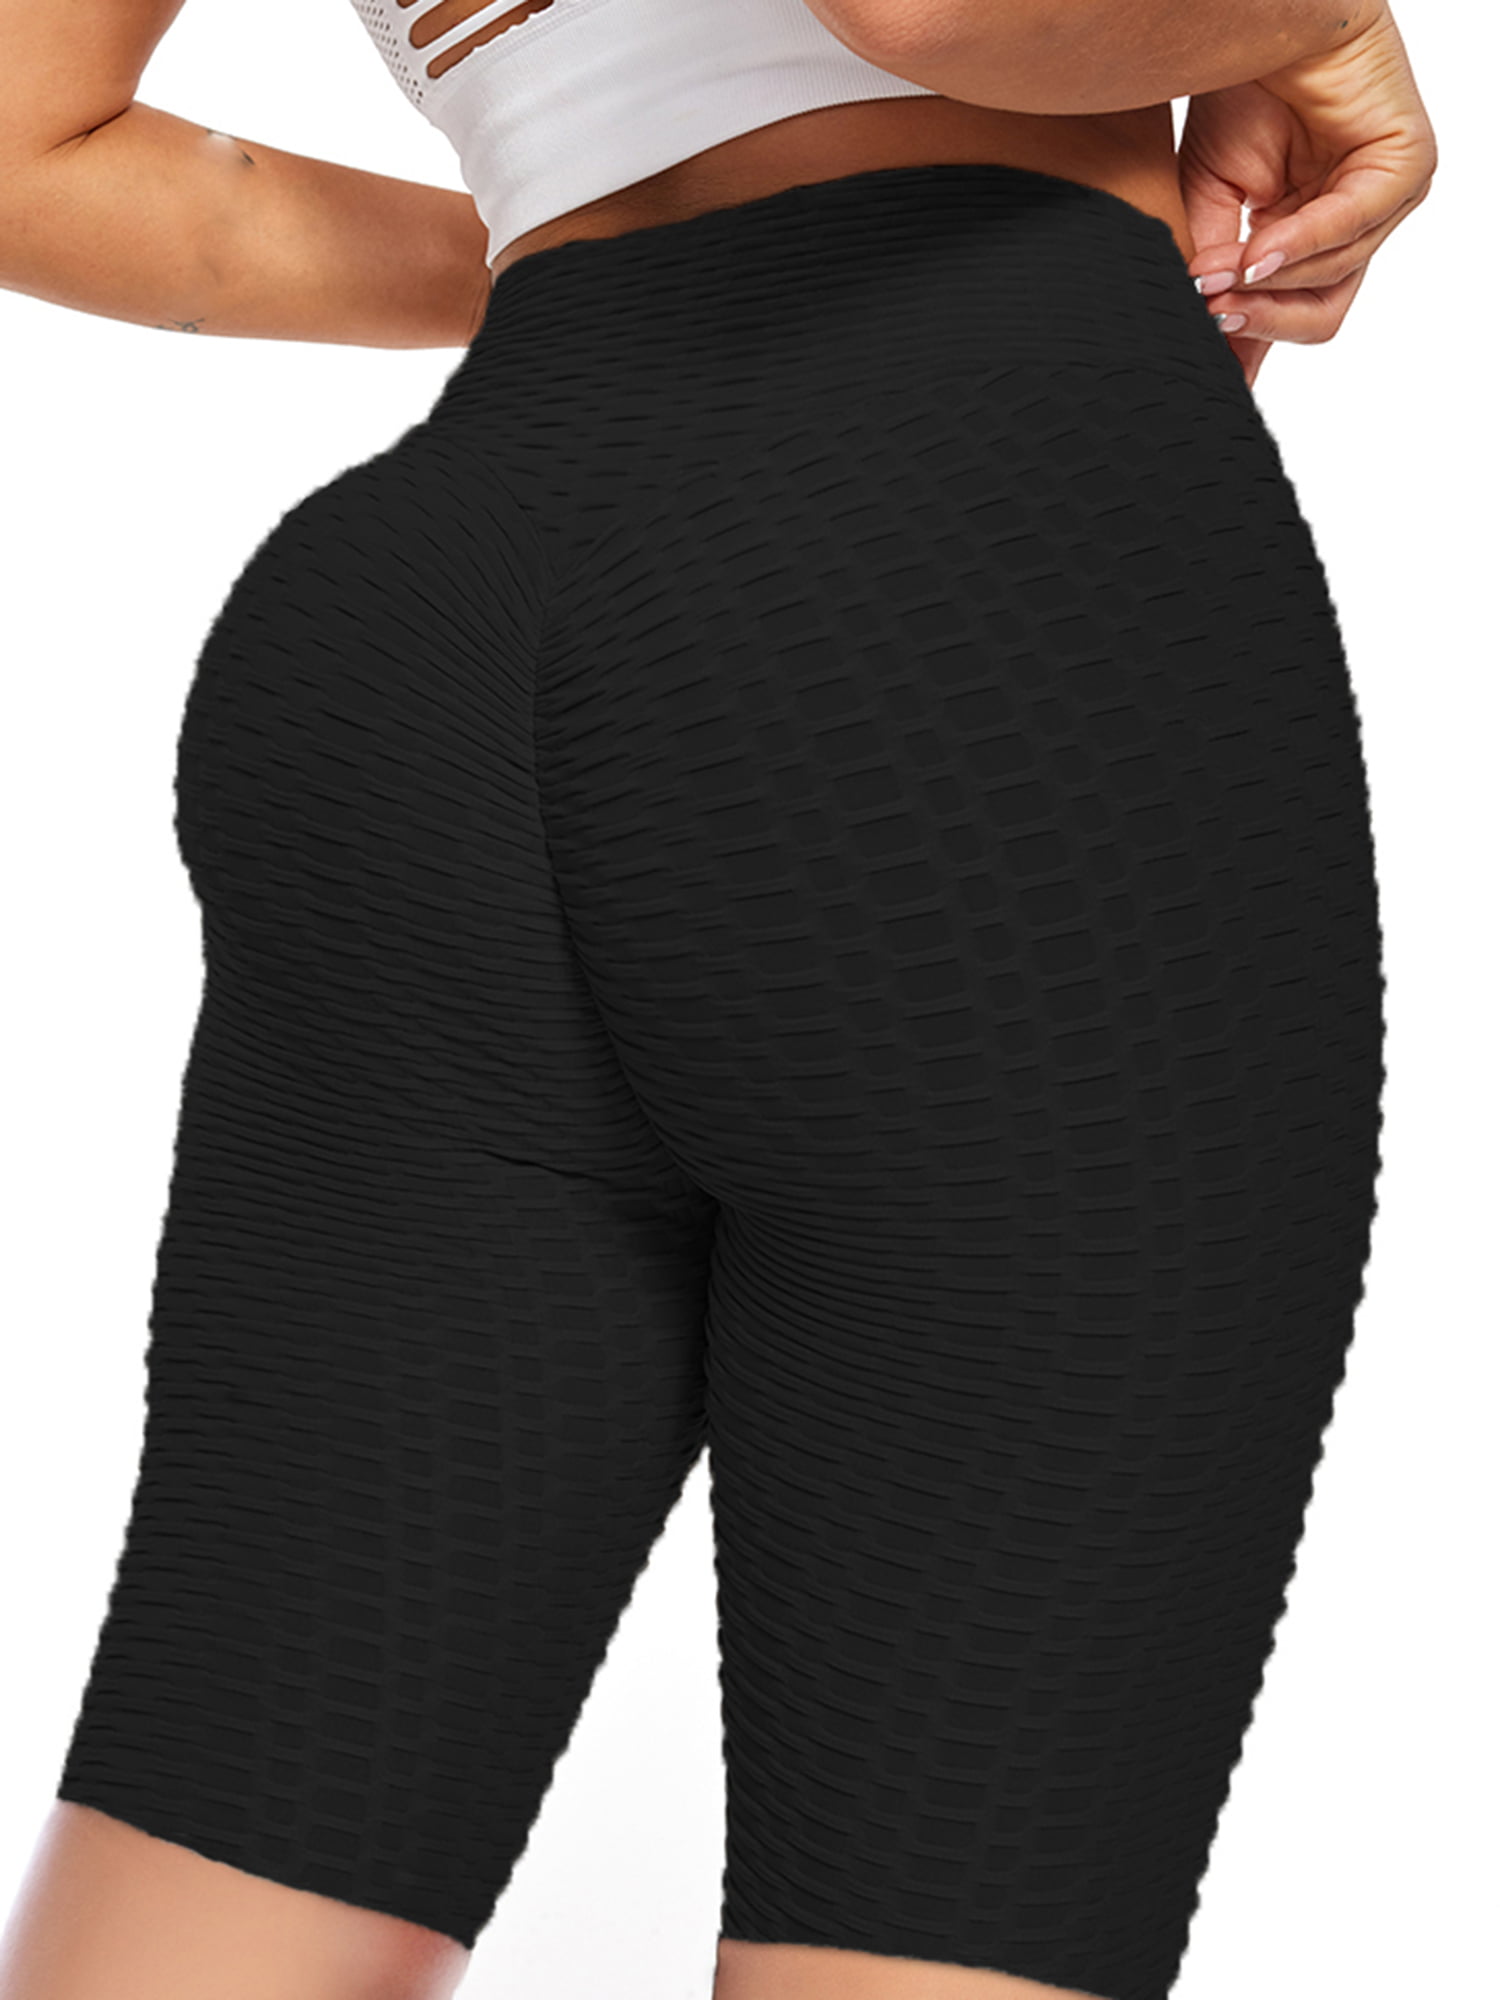 POTO TIK Tok Shorts for Women High Waisted Yoga Shorts Workout Bruched Butt Lifting Textured Shorts Summer Sport Shorts 